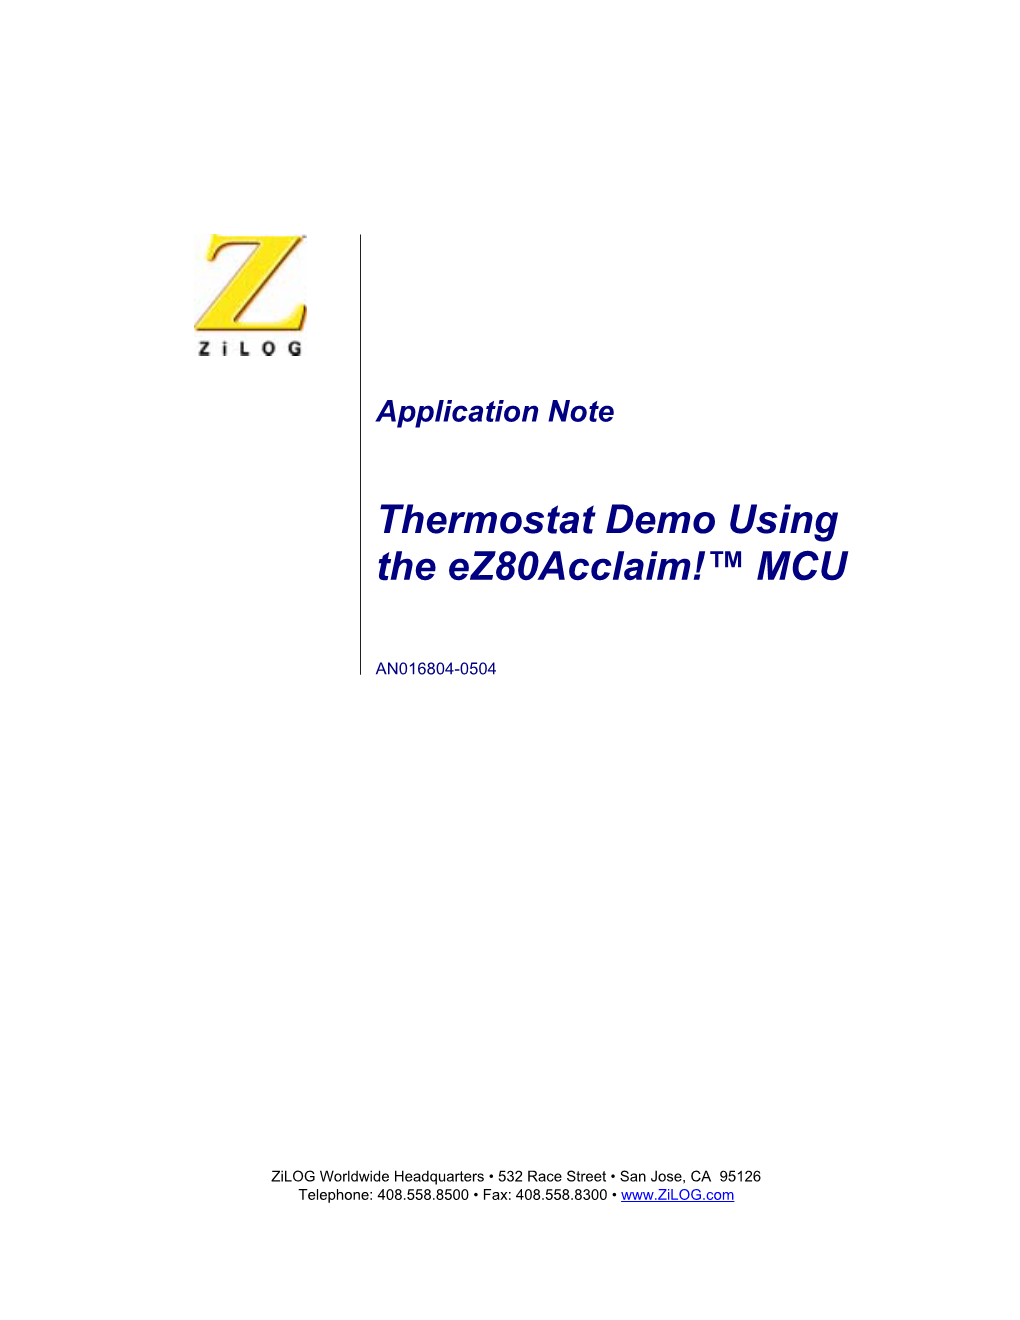 Thermostat Demo Using the Ez80acclaim!™ MCU